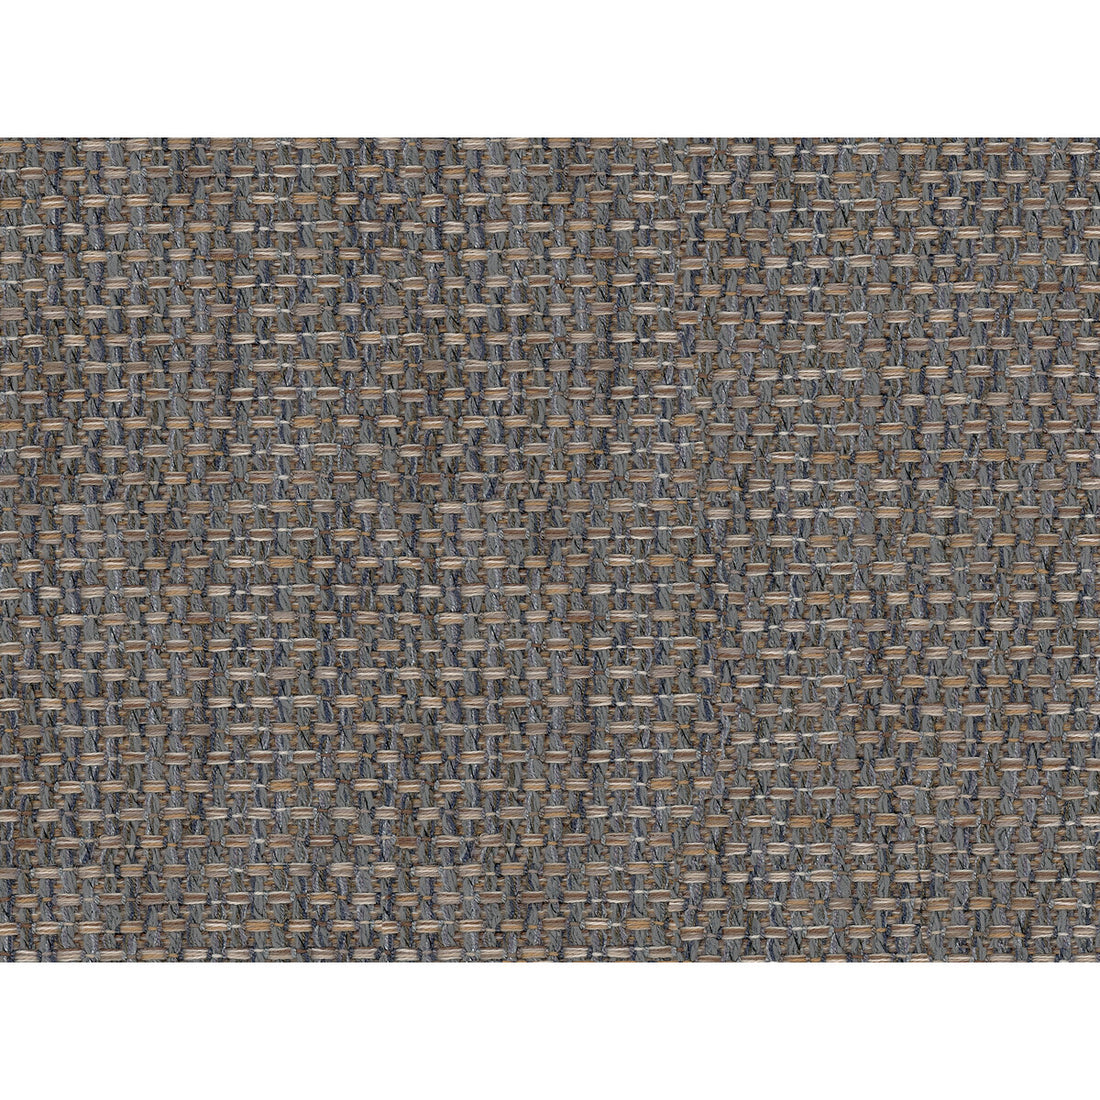 Kravet Smart fabric in 34322-1516 color - pattern 34322.1516.0 - by Kravet Smart